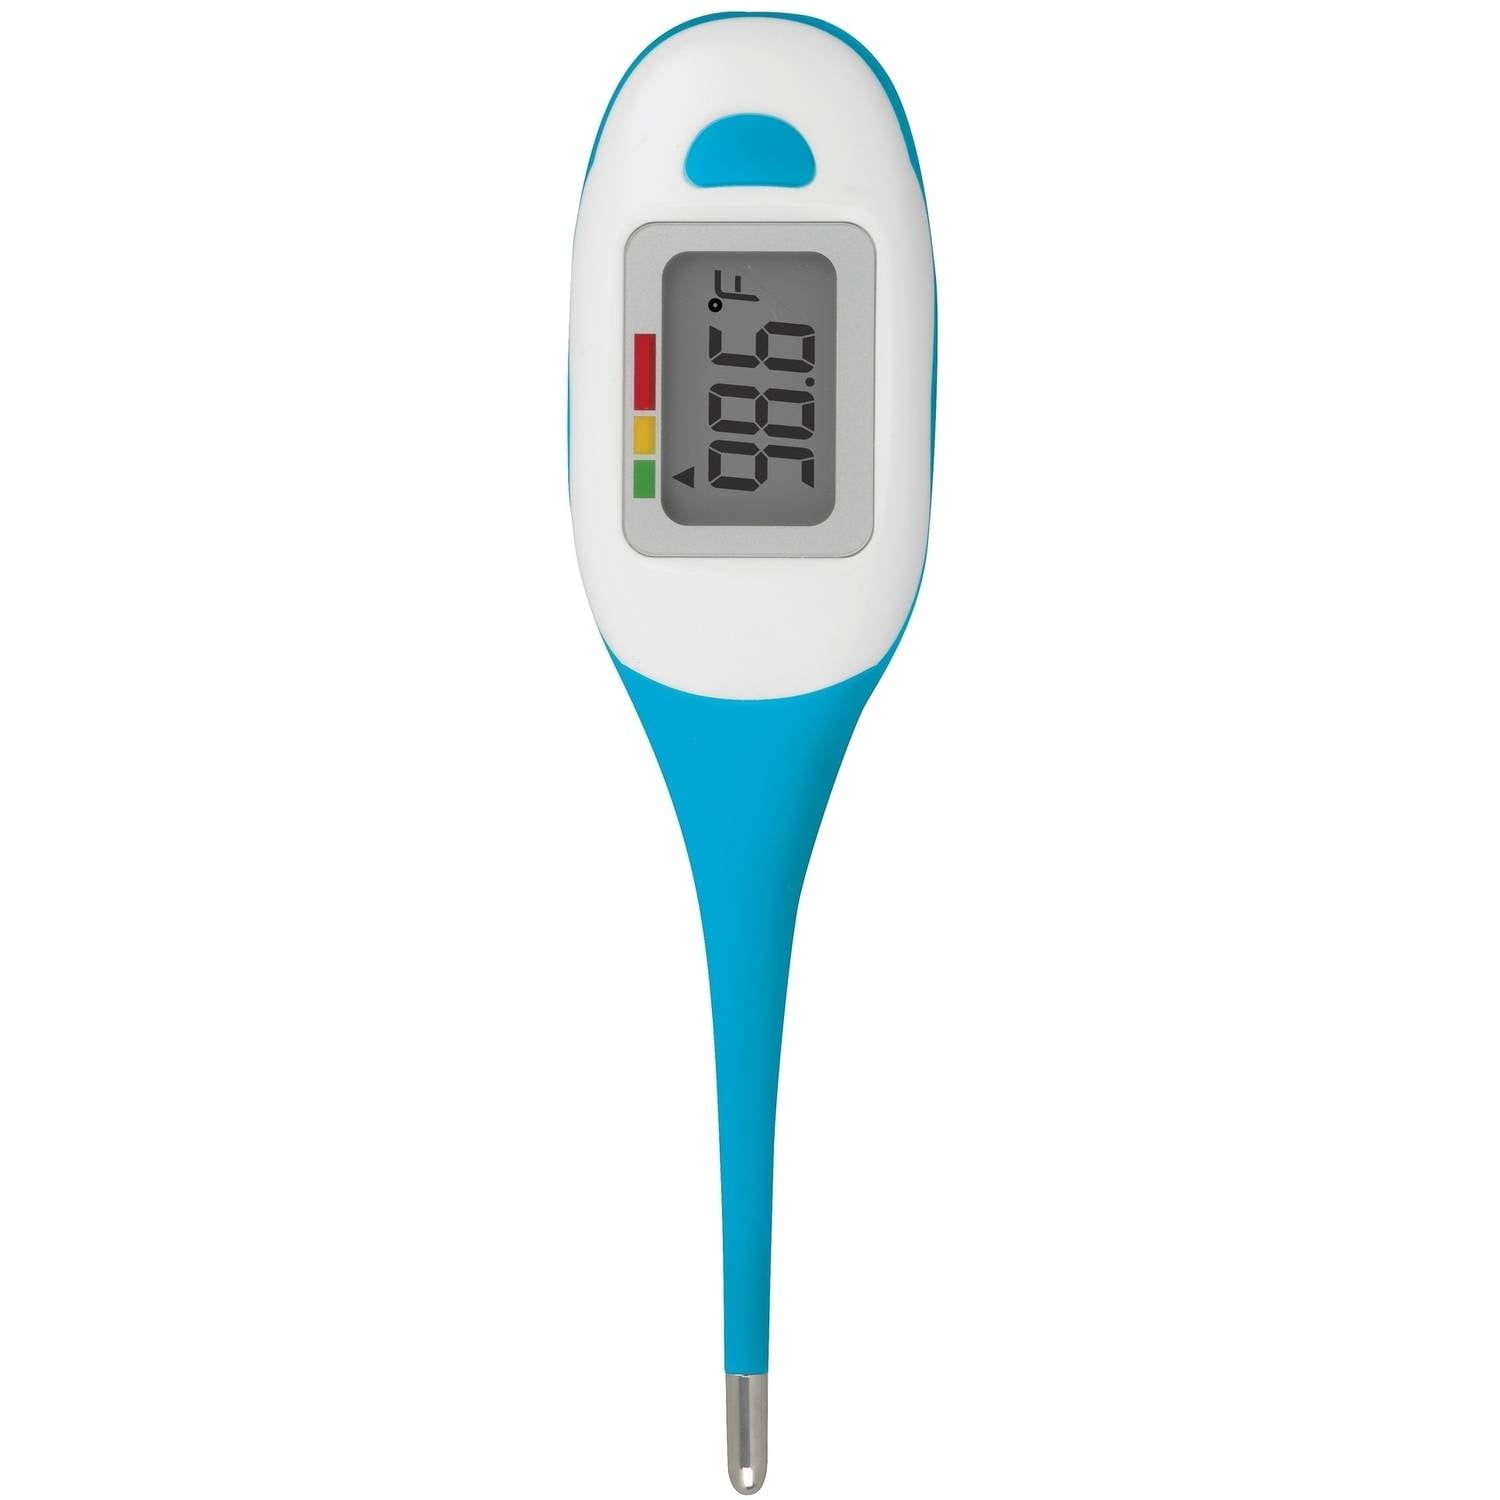 Veridian 10 Second Digital Thermometer  Walmart com 